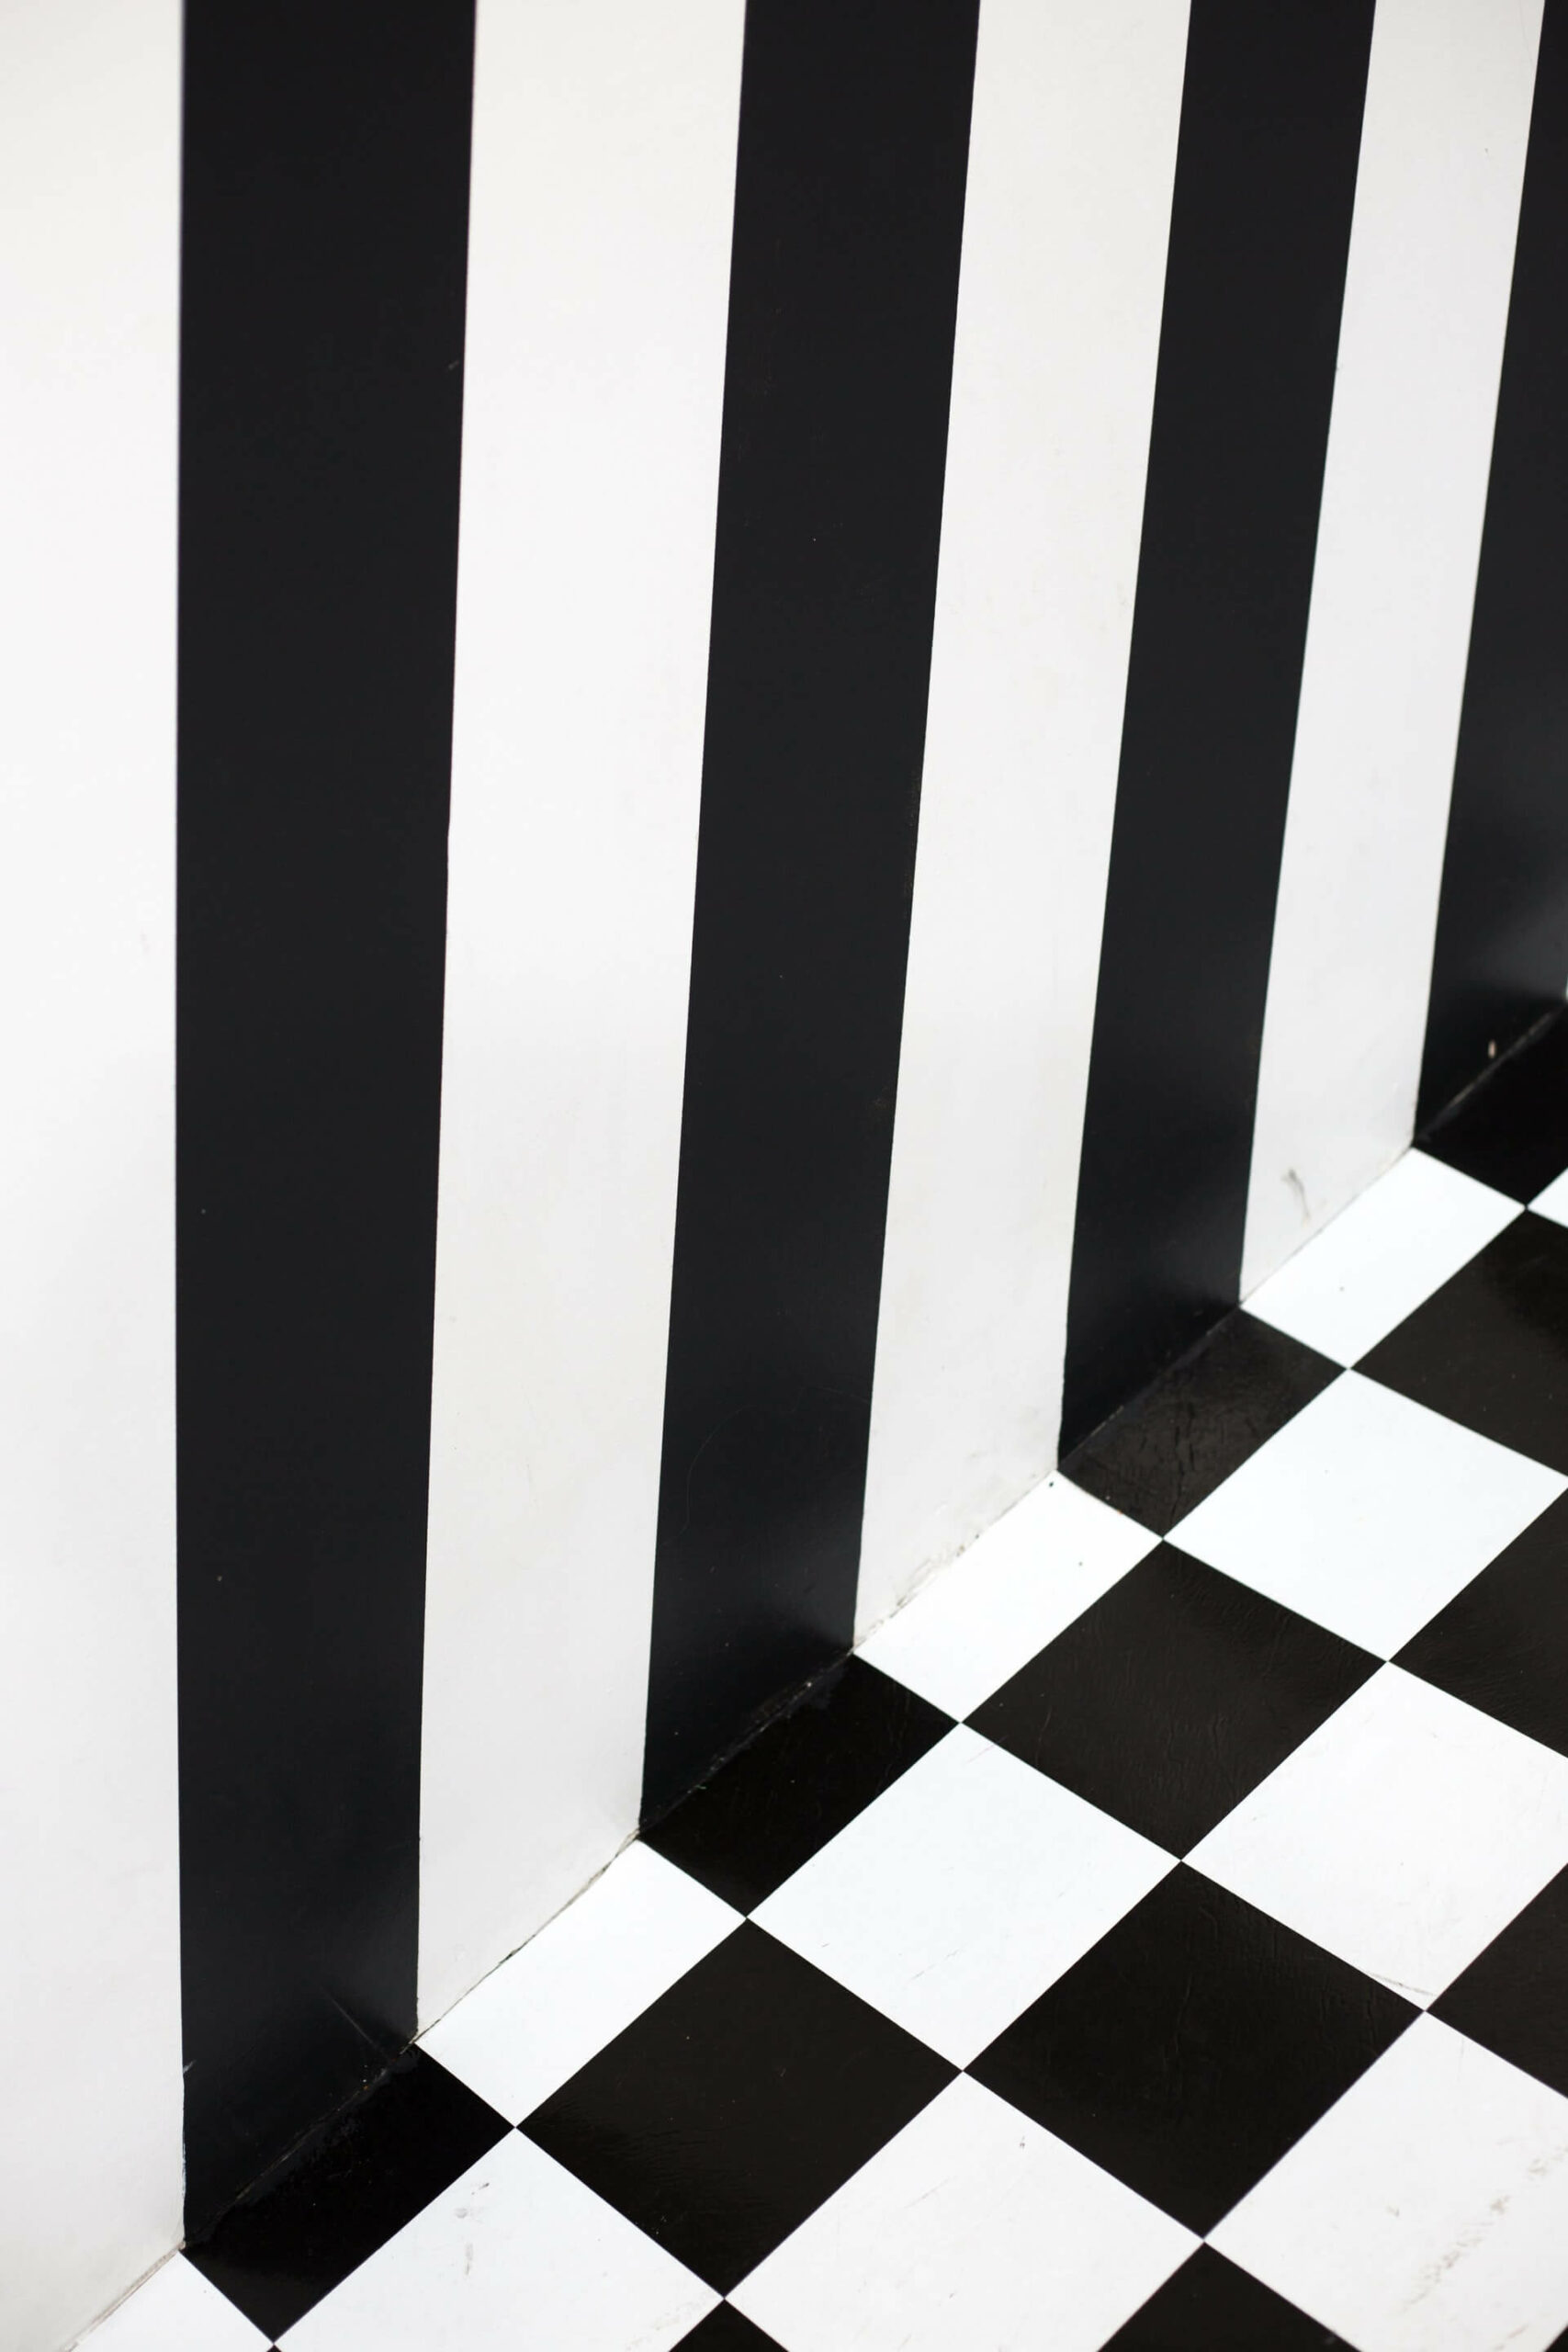 Checkerboard Tile Design
